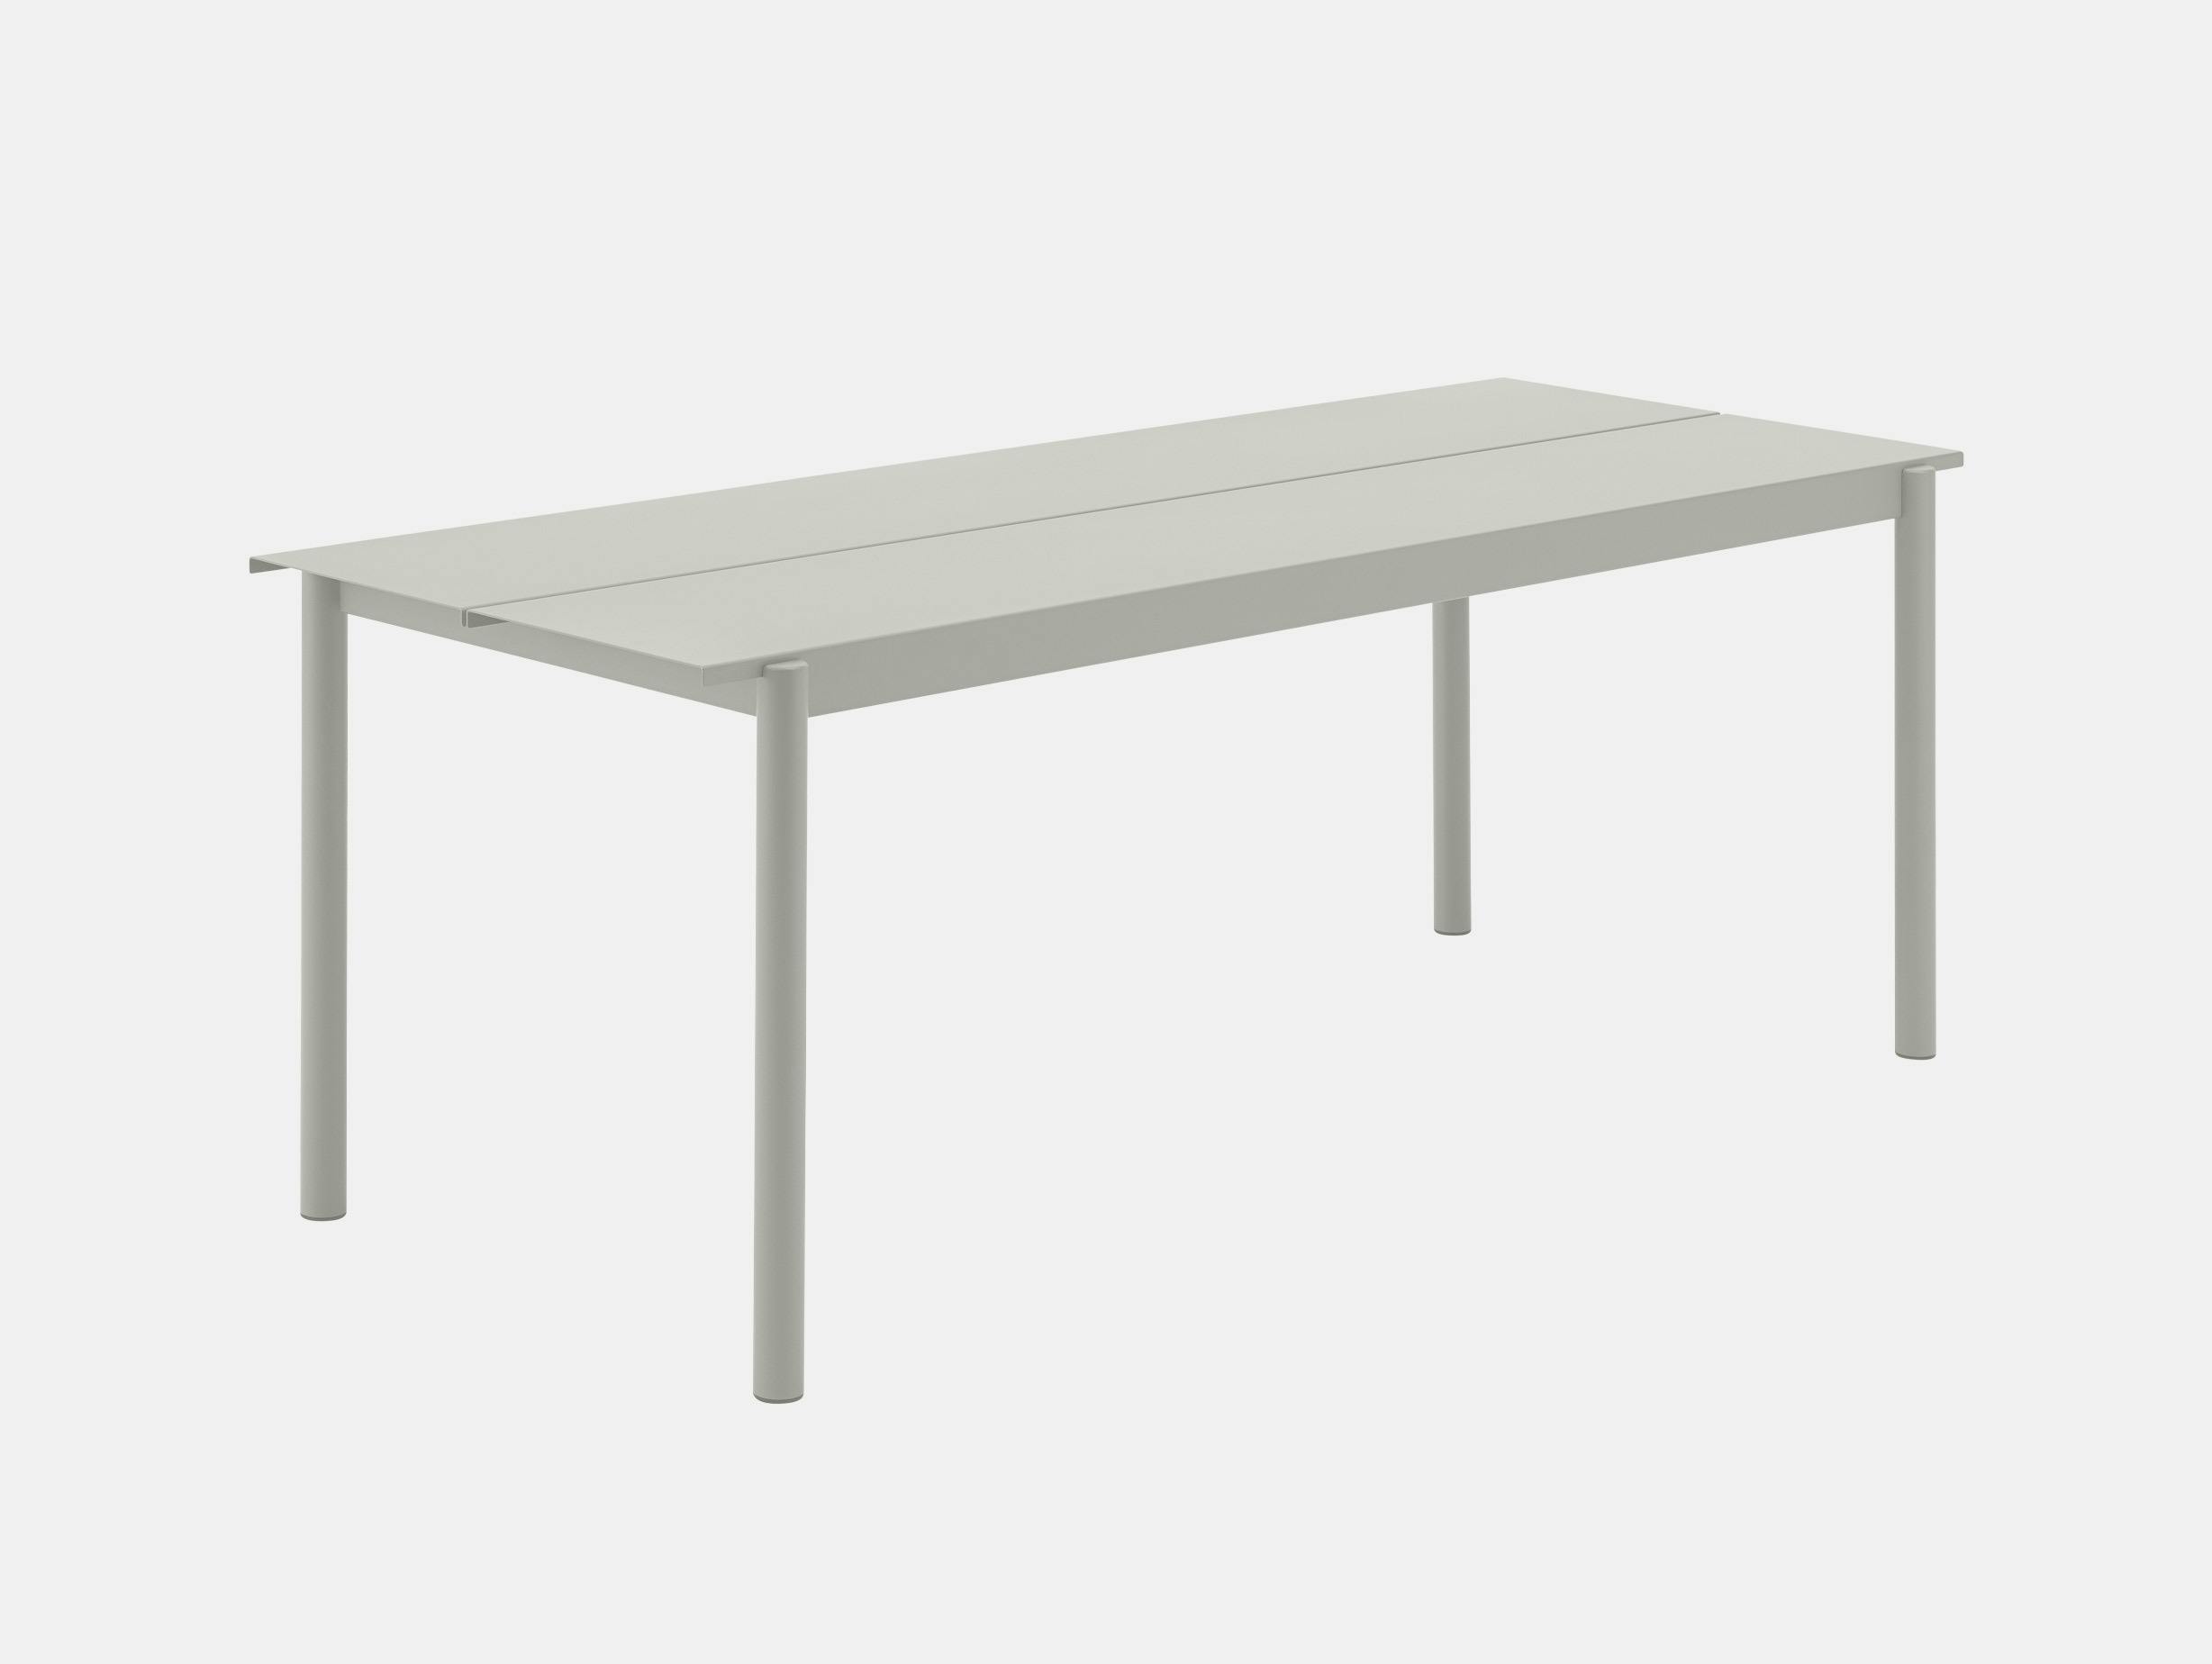 Muuto thomas bentzen linear steel table outdoor 200 grey